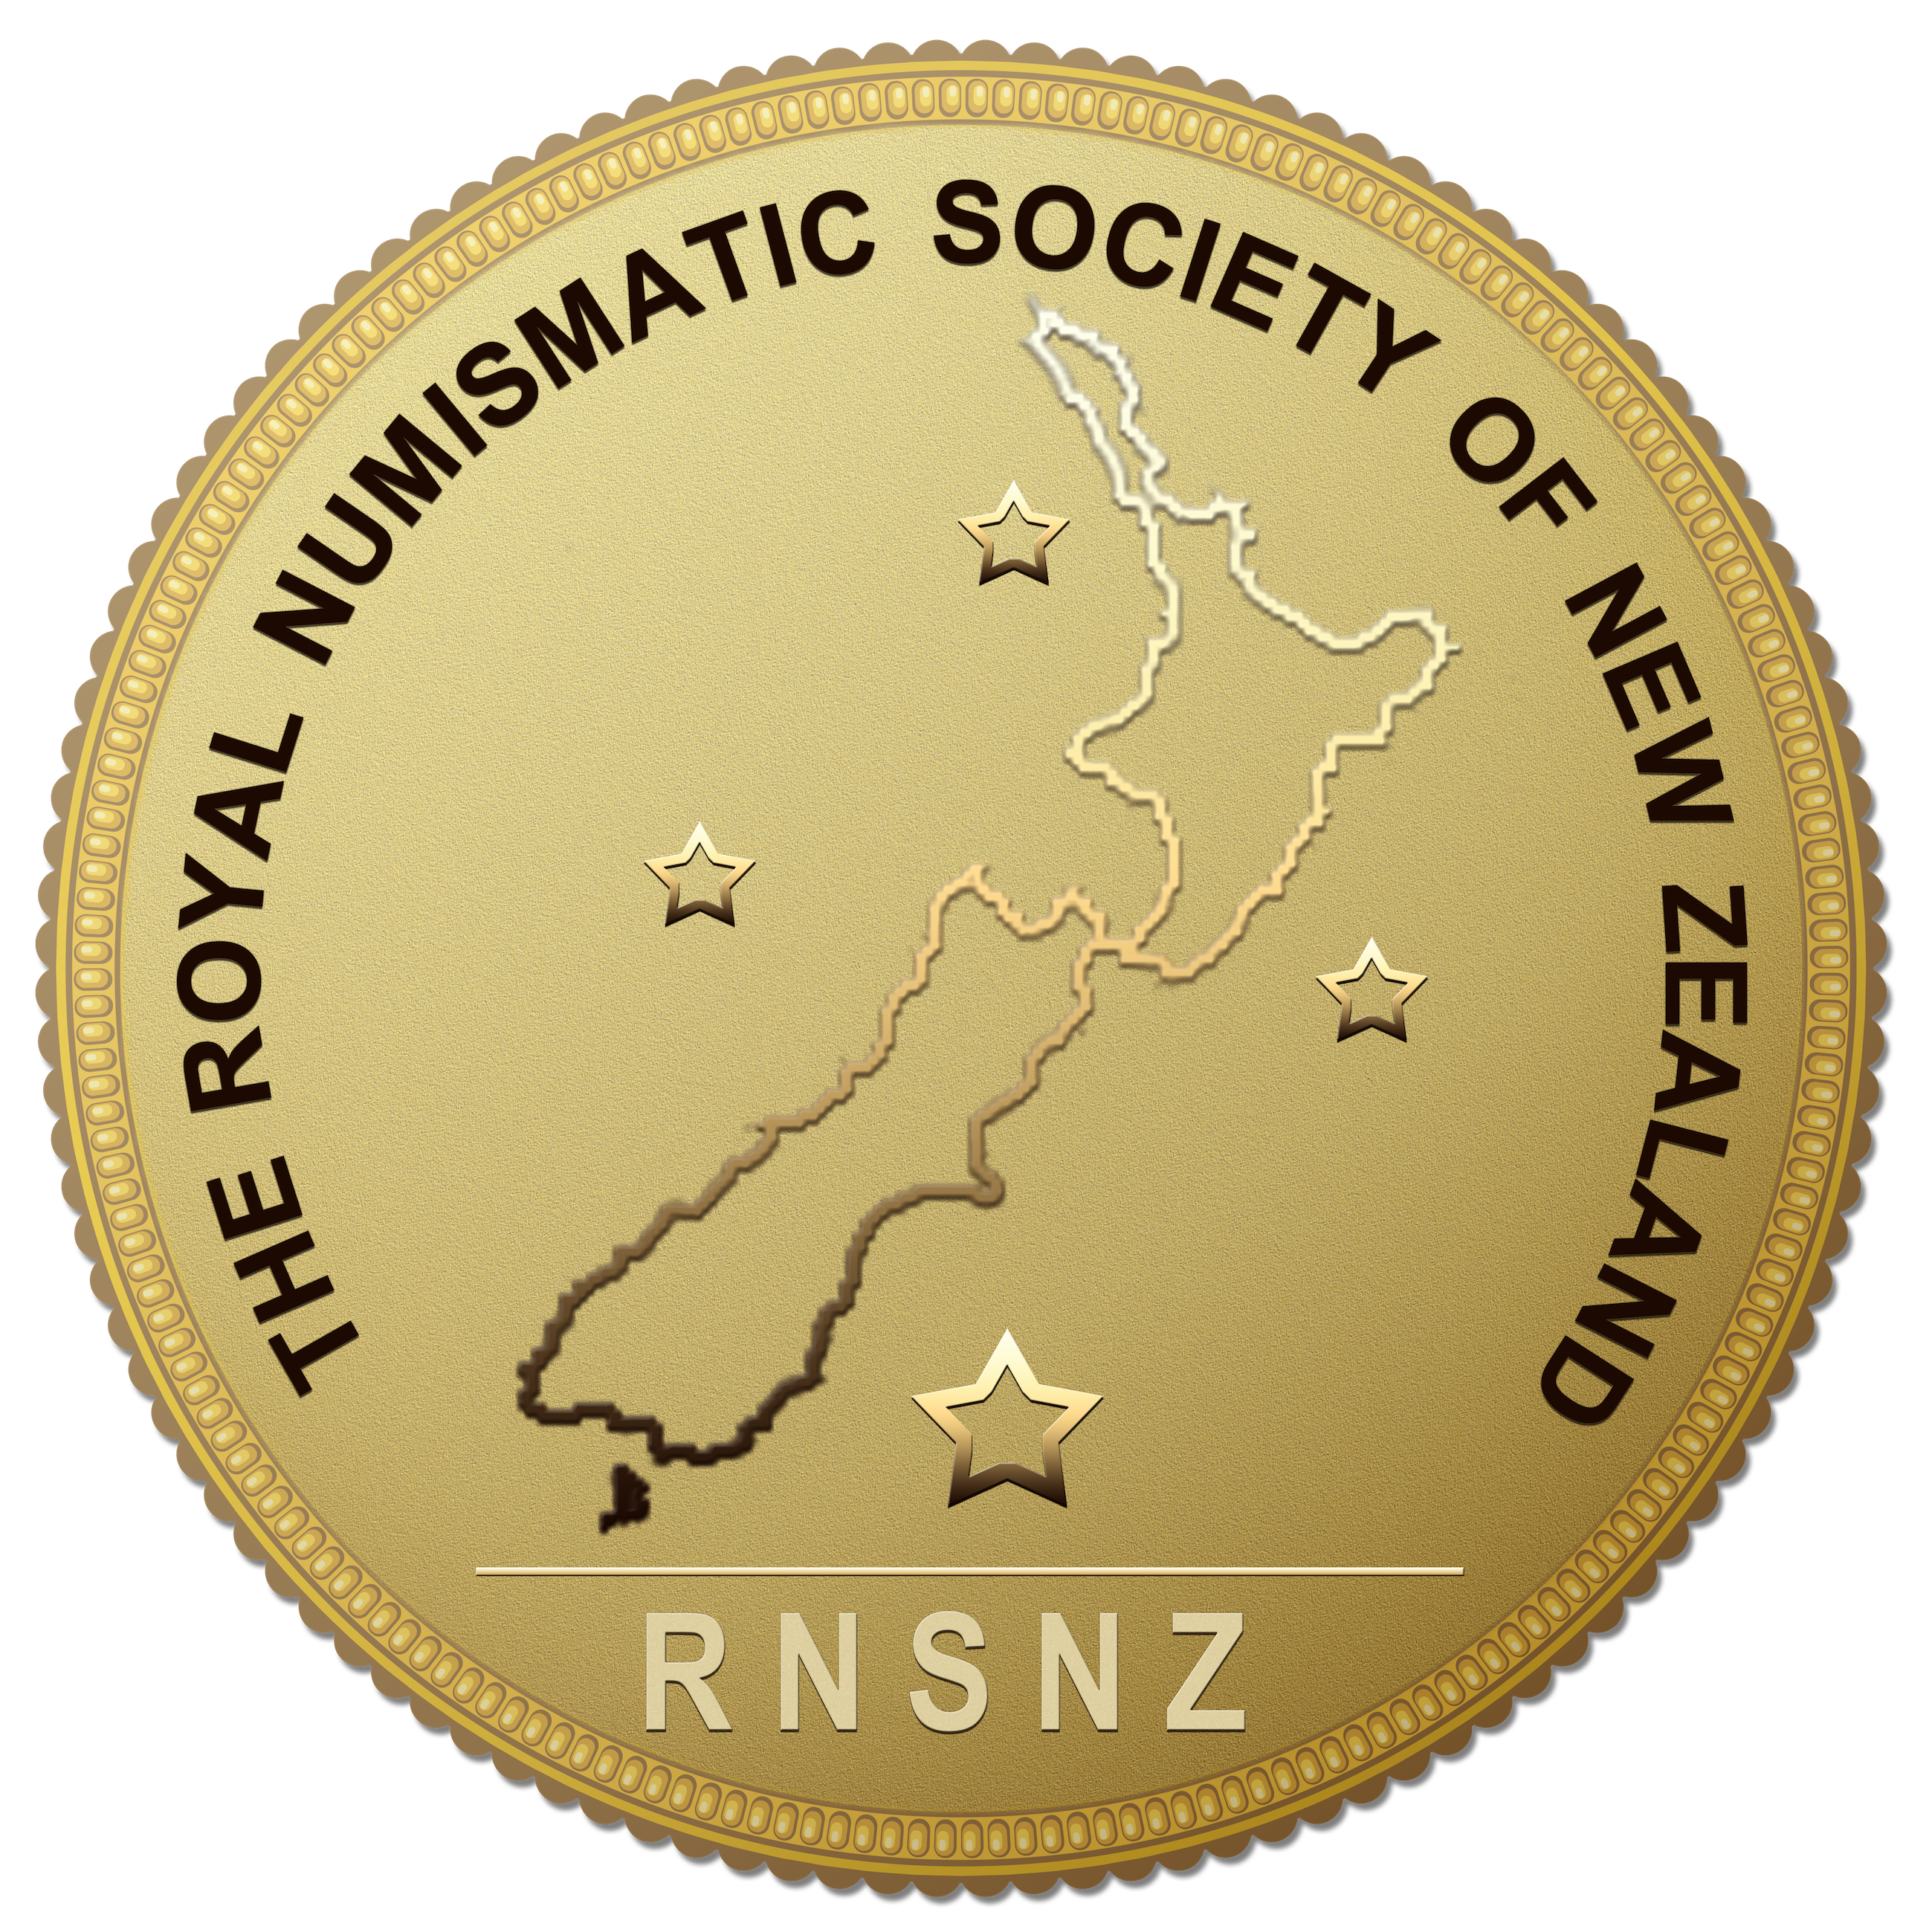 The Royal Numismatic Society of New Zealand